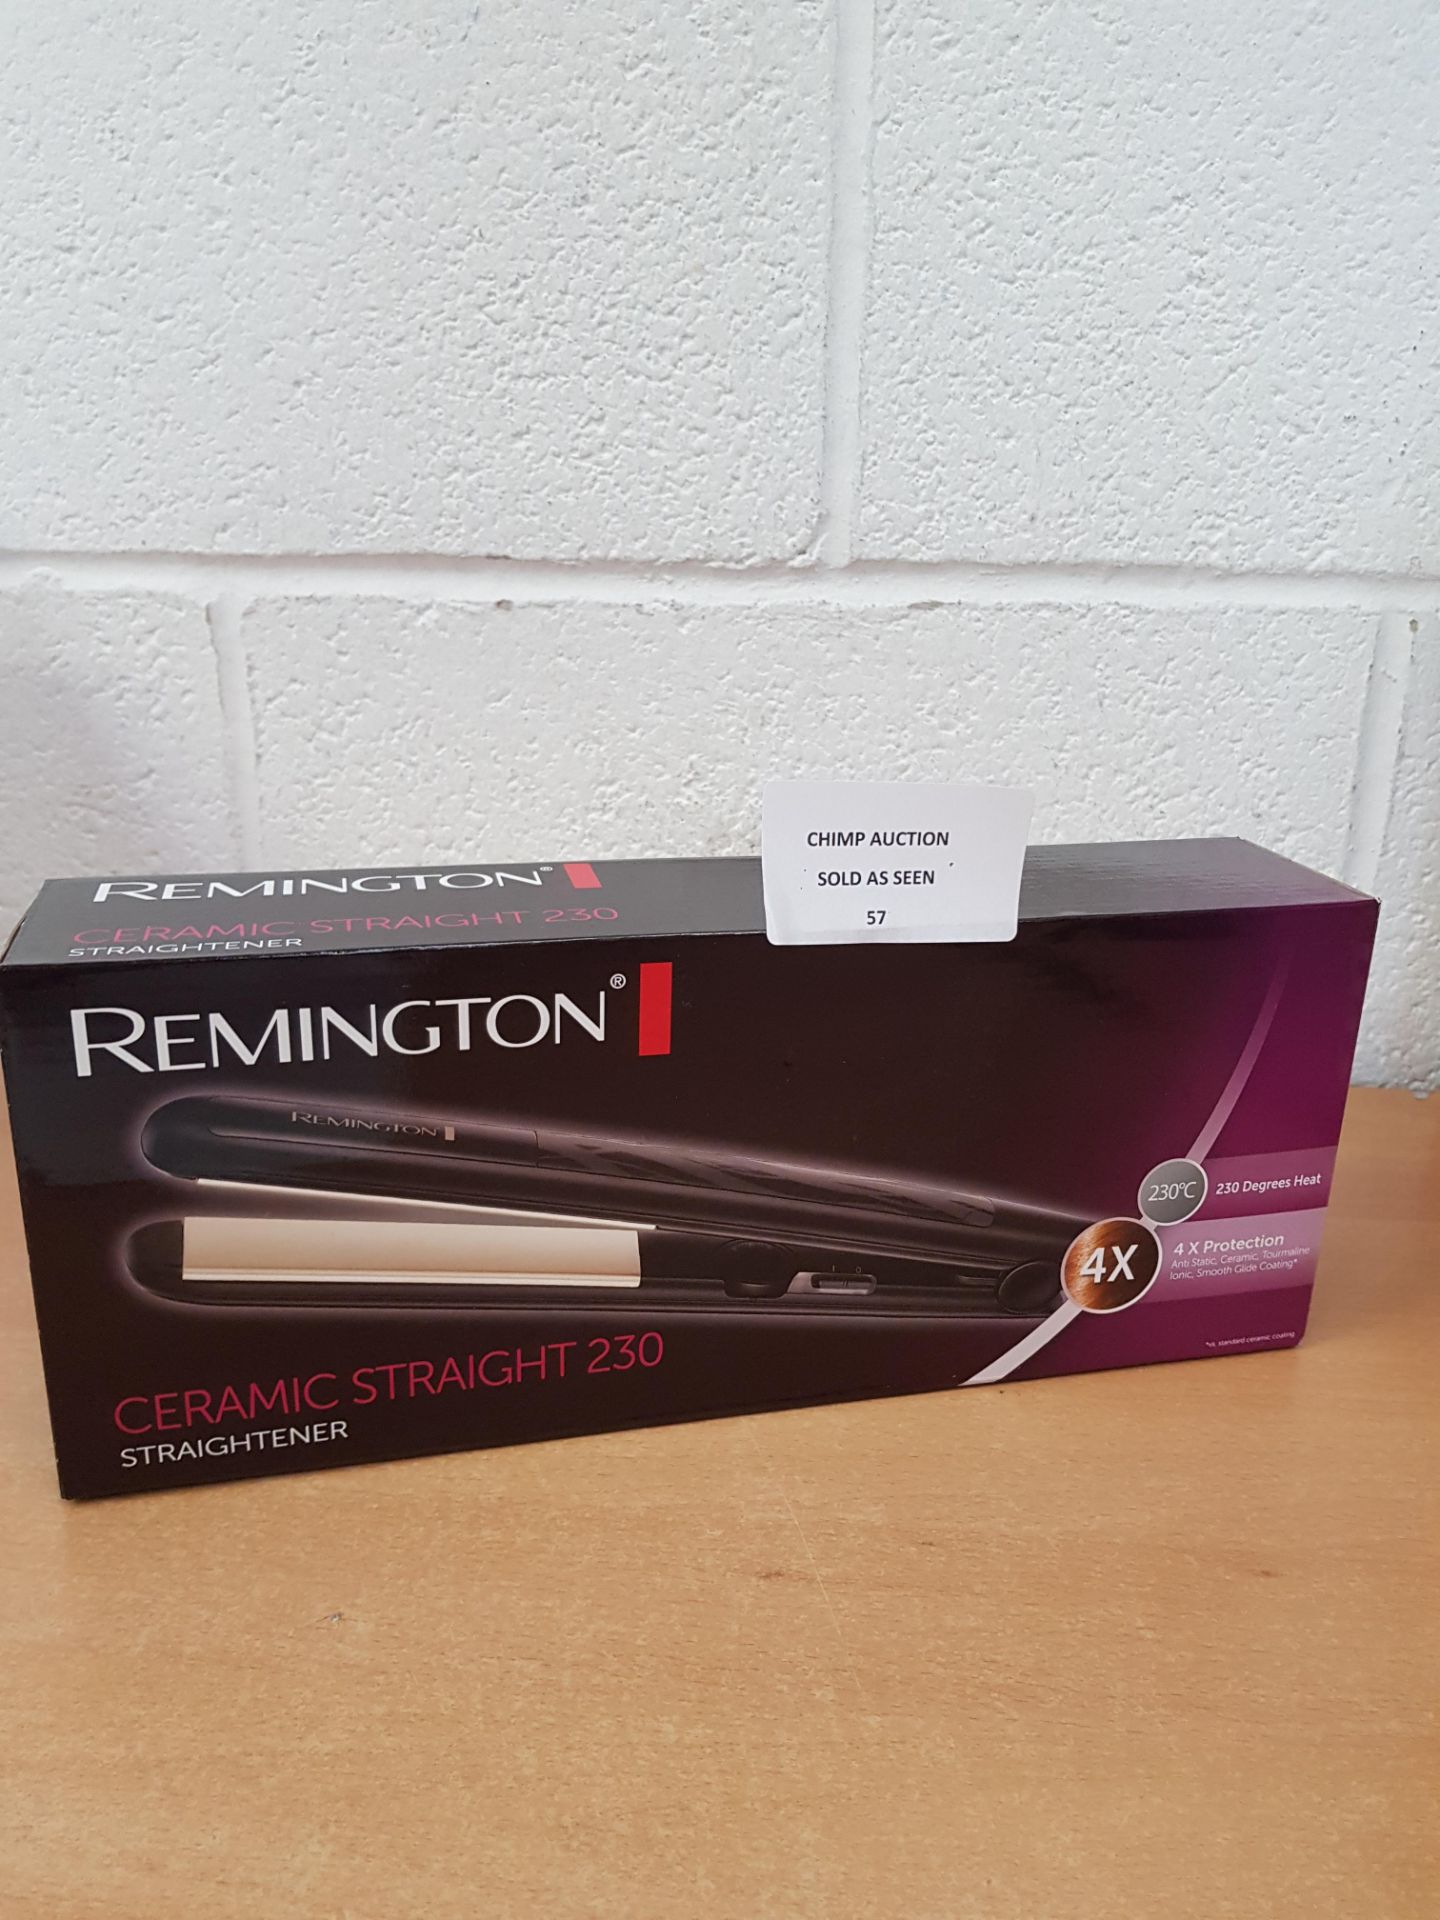 Remington Ceramic Straight 230 hair Straightener